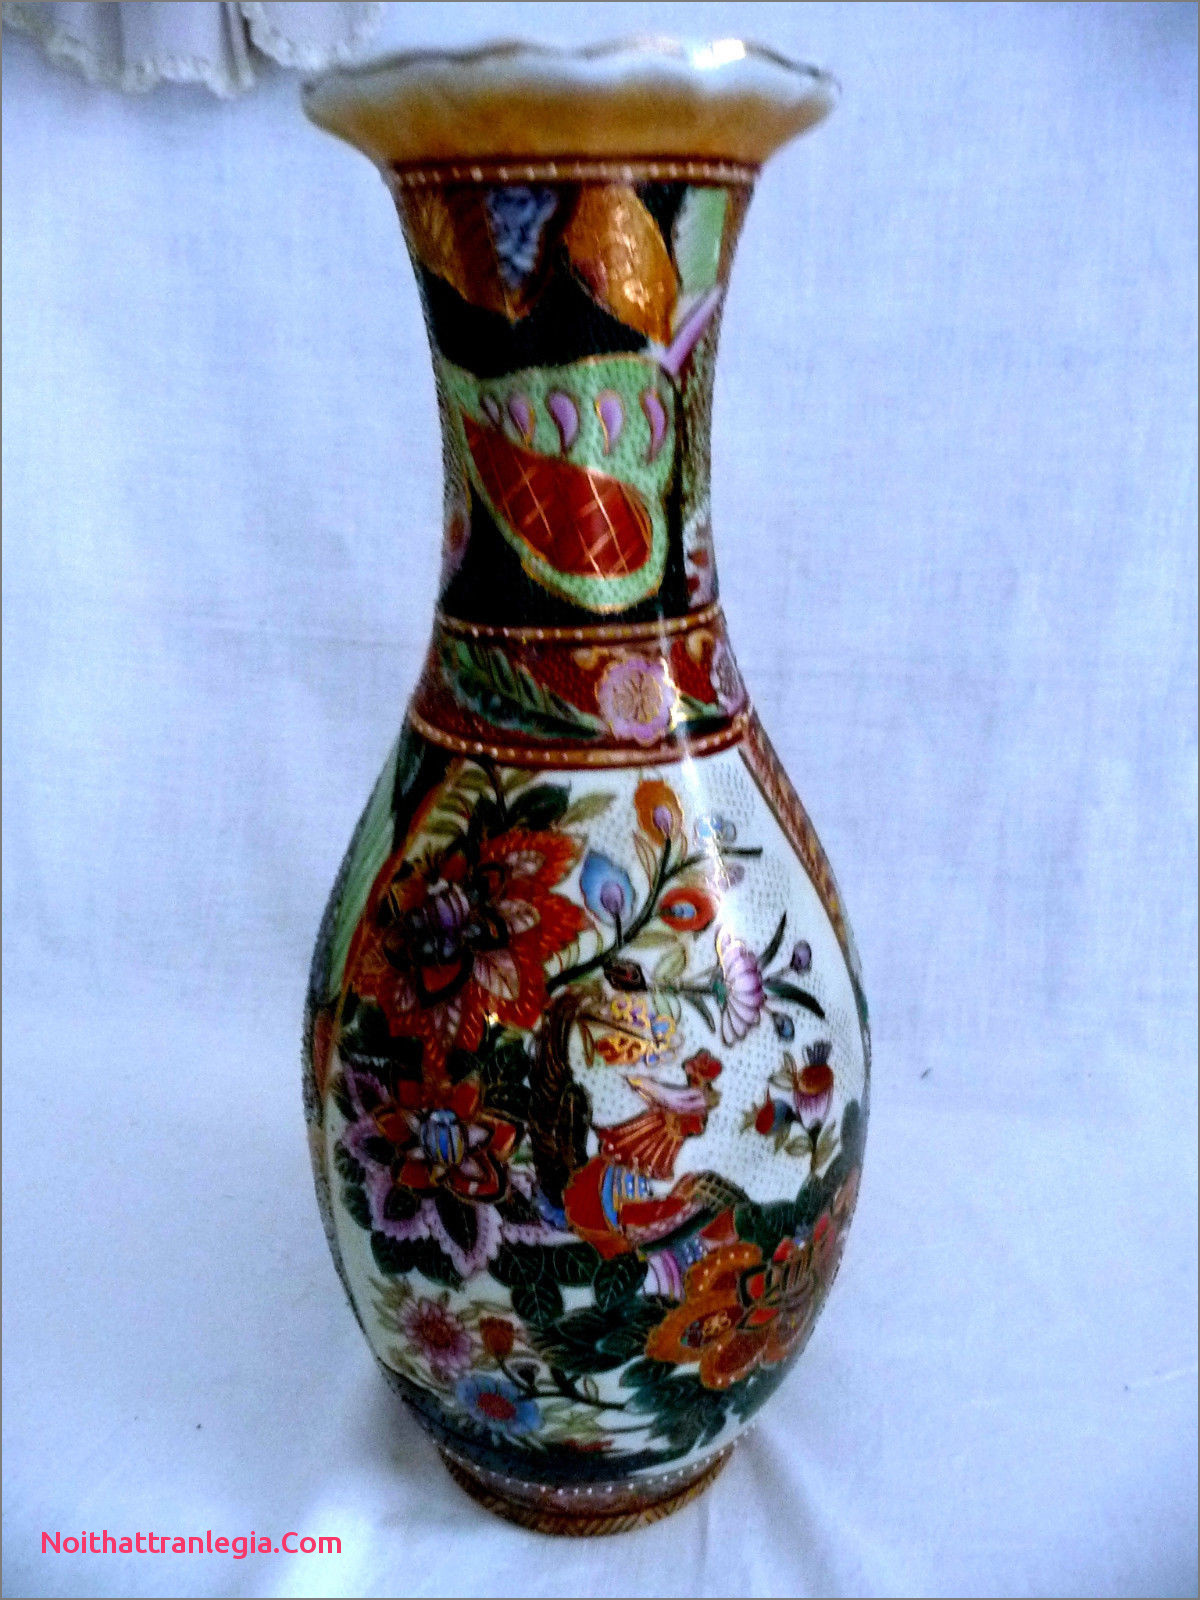 20 Elegant Waterford Crystal Vase Markings 2024 free download waterford crystal vase markings of 20 chinese antique vase noithattranlegia vases design regarding 1 von 11 siehe mehr